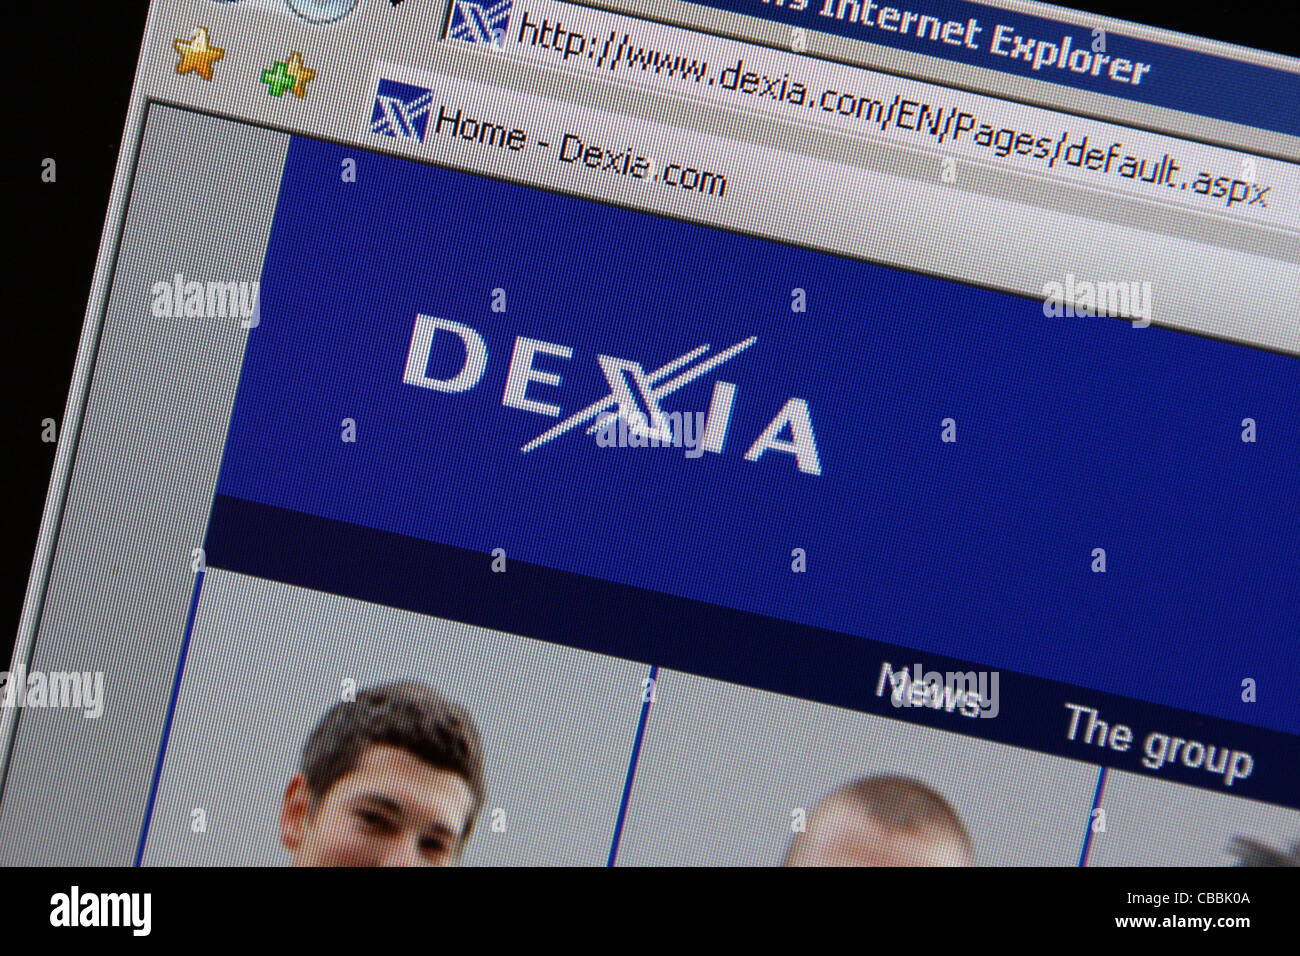 dexia dexia.com website Stock Photo